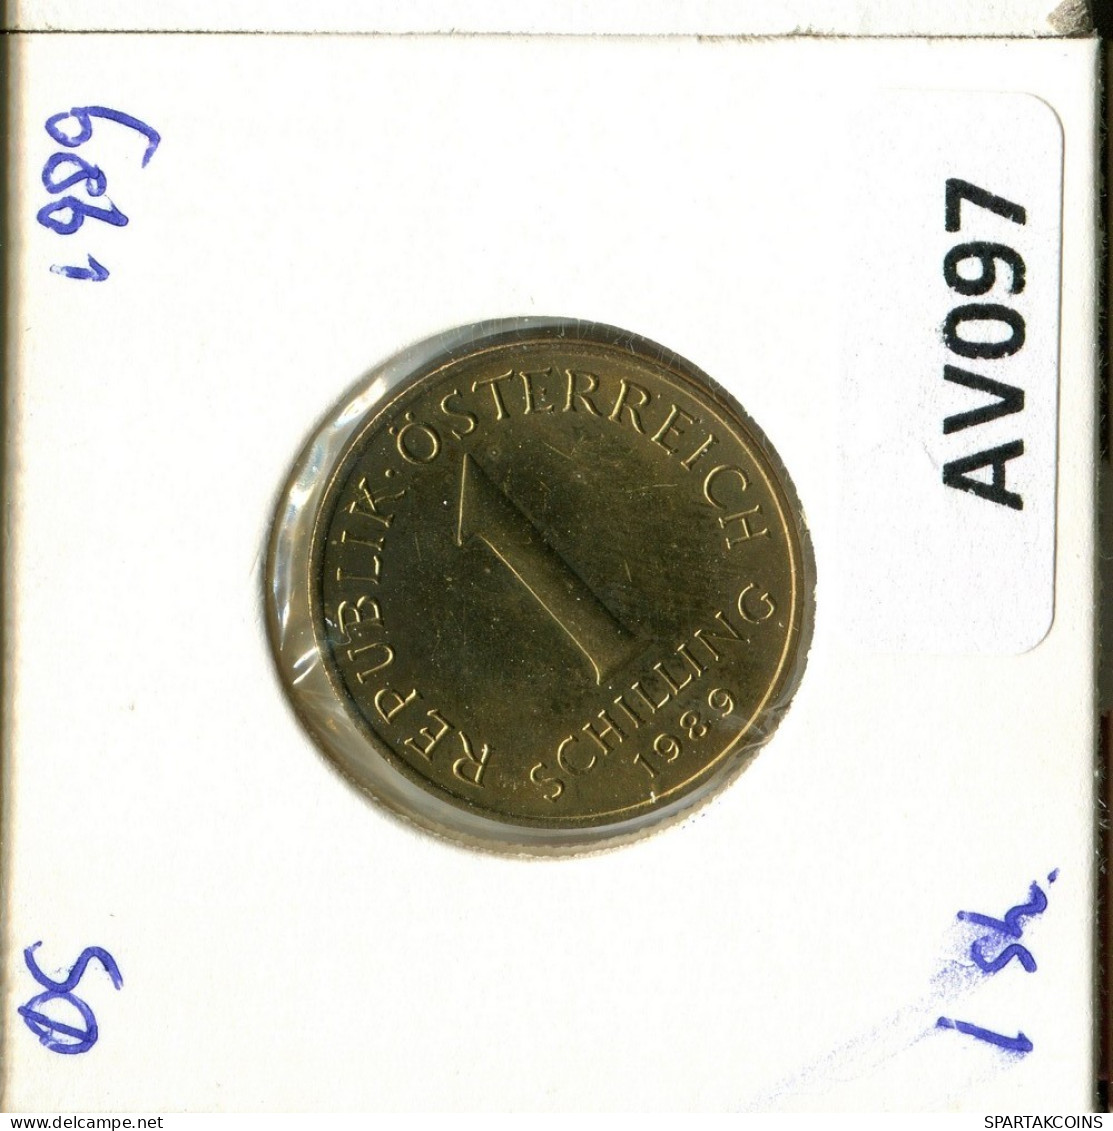 1 SCHILLING 1989 AUSTRIA Coin #AV097.U.A - Oostenrijk